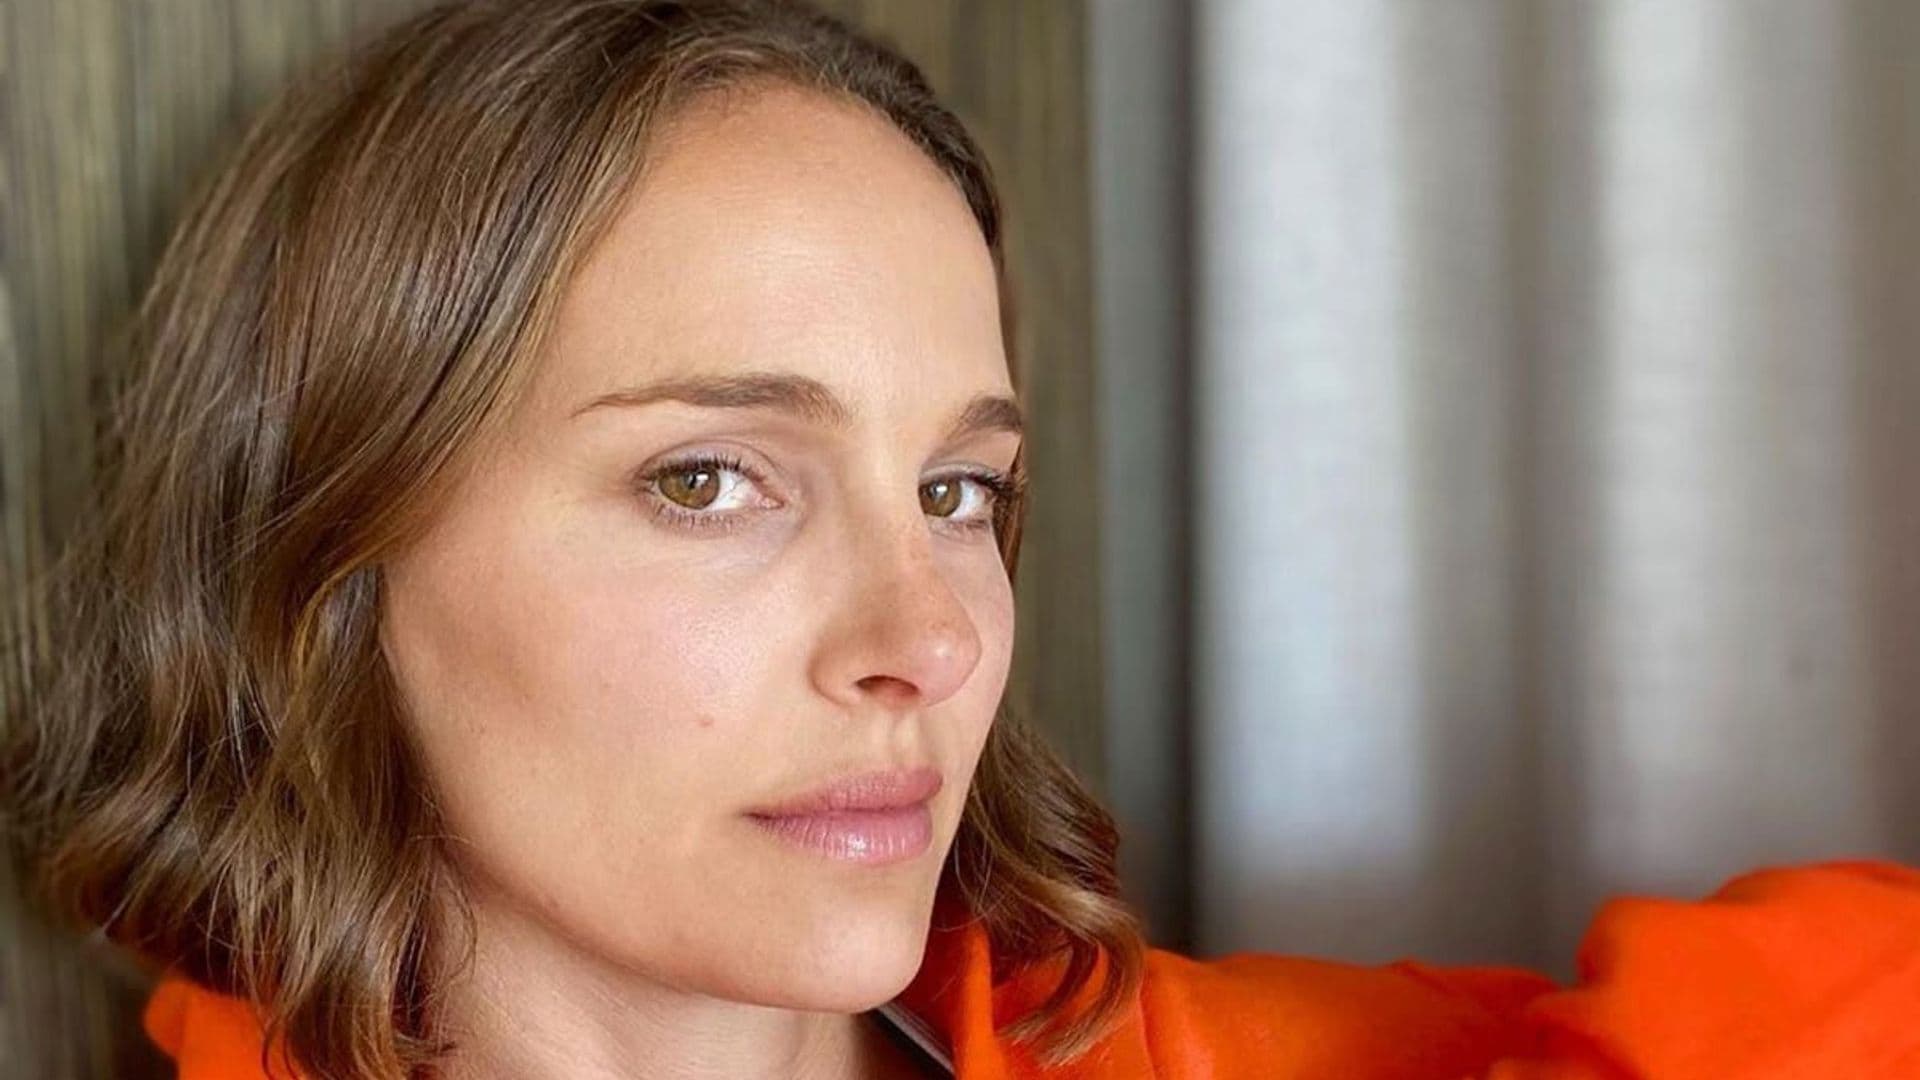 Natalie Portman quickly shut down pregnancy rumors: “Hey, so I‘m totally not pregnant”